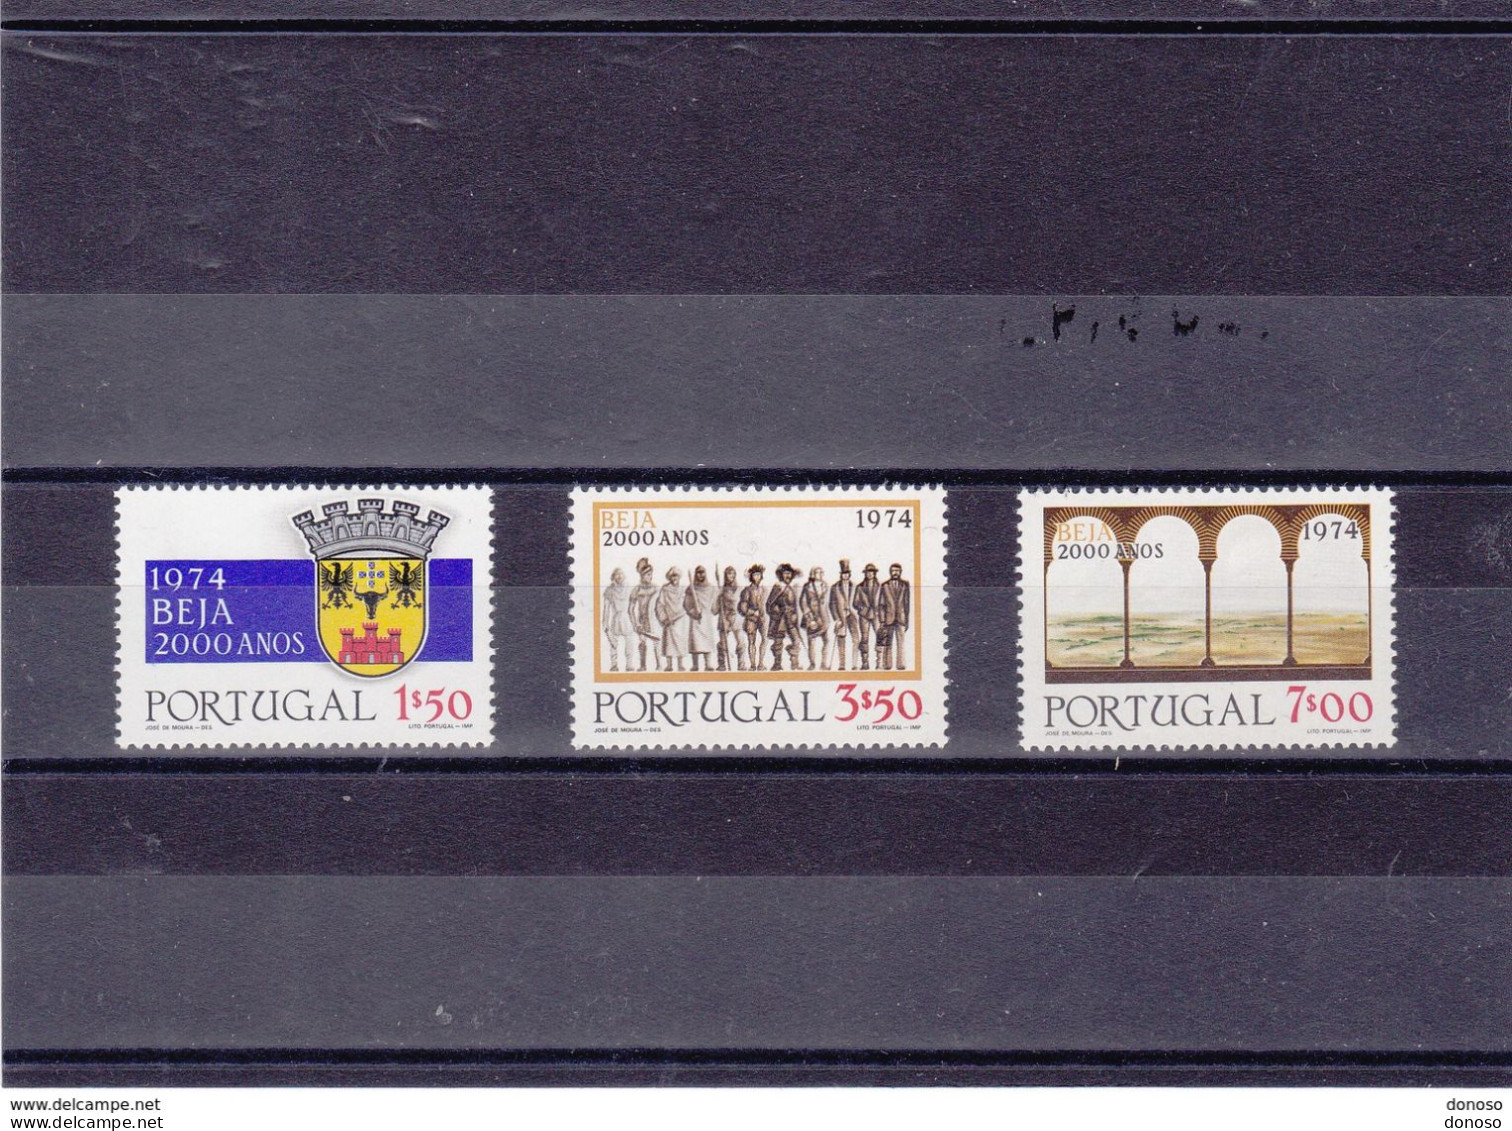 PORTUGAL 1974 VILLE DE BEJA Yvert 1240-1242, Michel 1260-1262 NEUF** MNH Cote 6,50 Euros - Nuovi